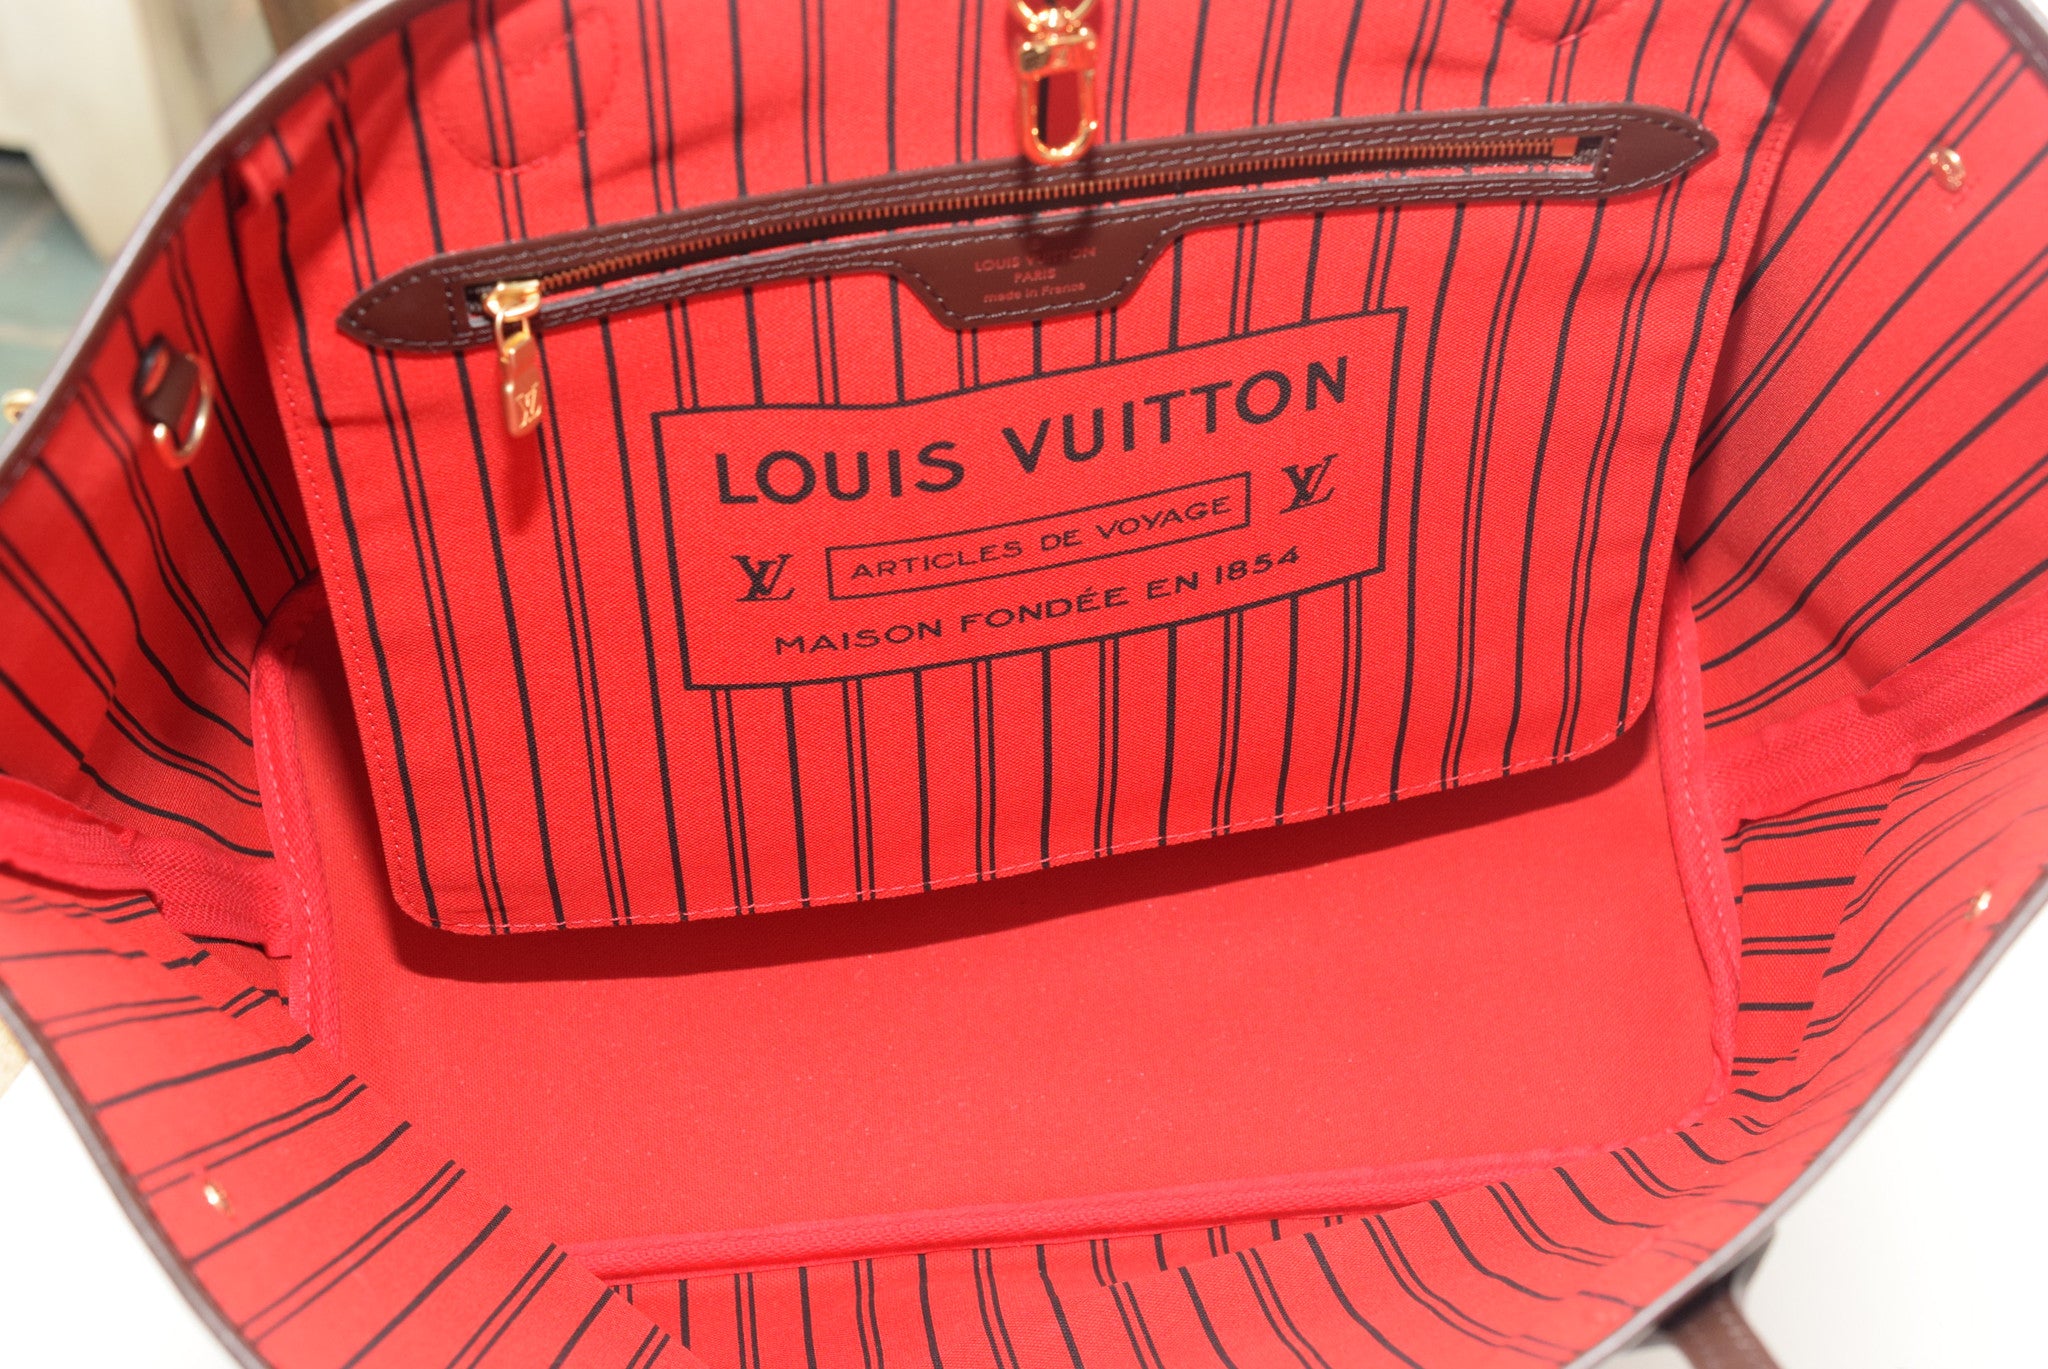 Louis Vuitton Man Bag Paint Can | IQS Executive